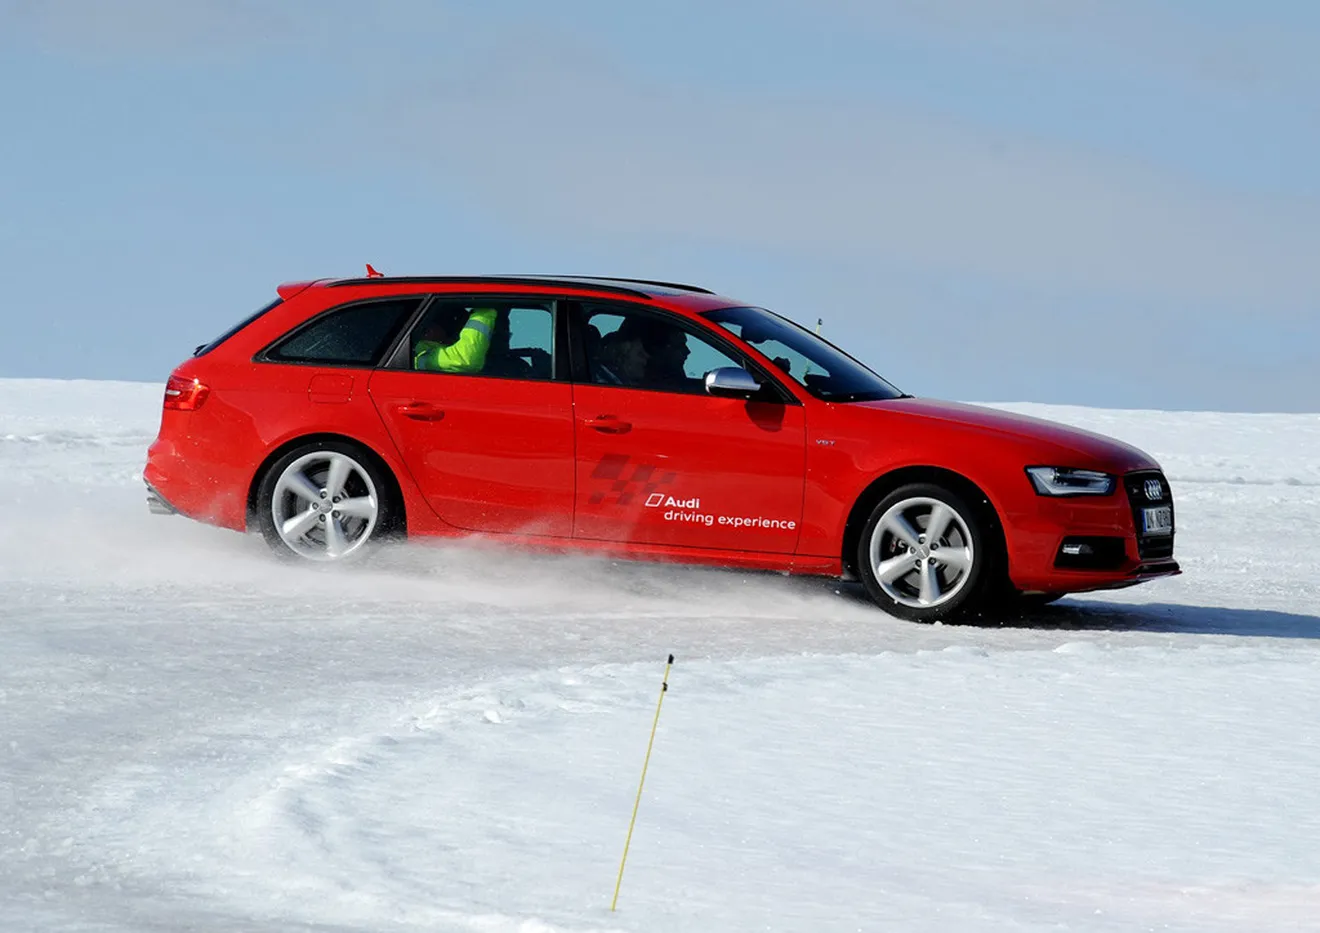 Audi Winter Experience: aprender a conducir sobre nieve